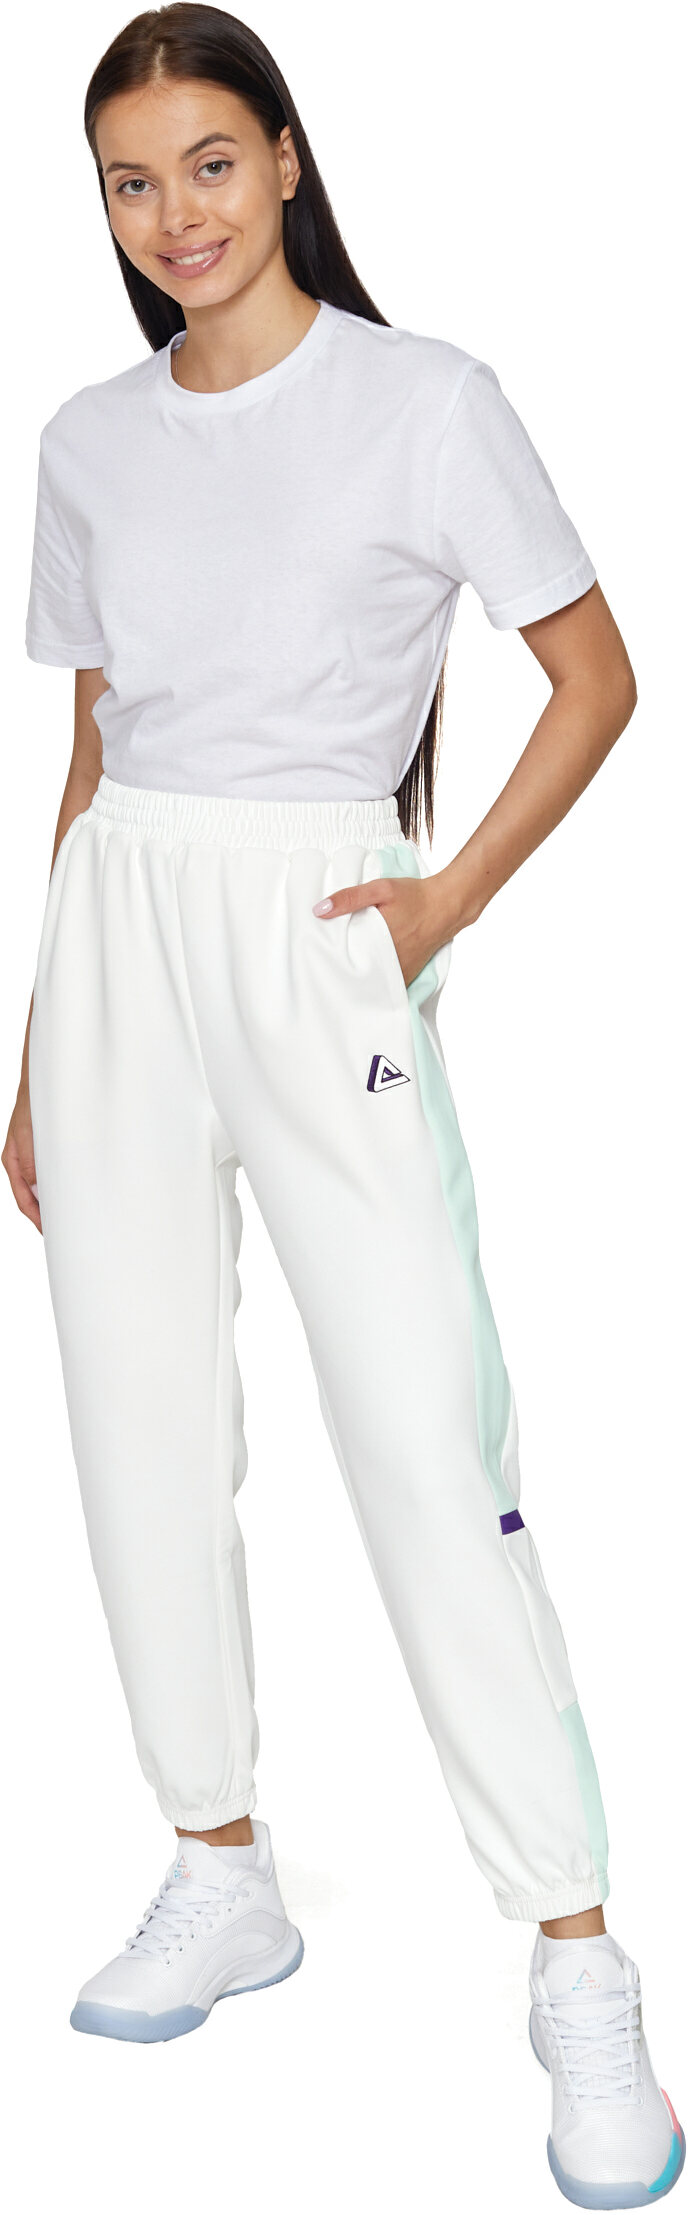 Спортивные брюки женские PEAK Knitted Pants белые M